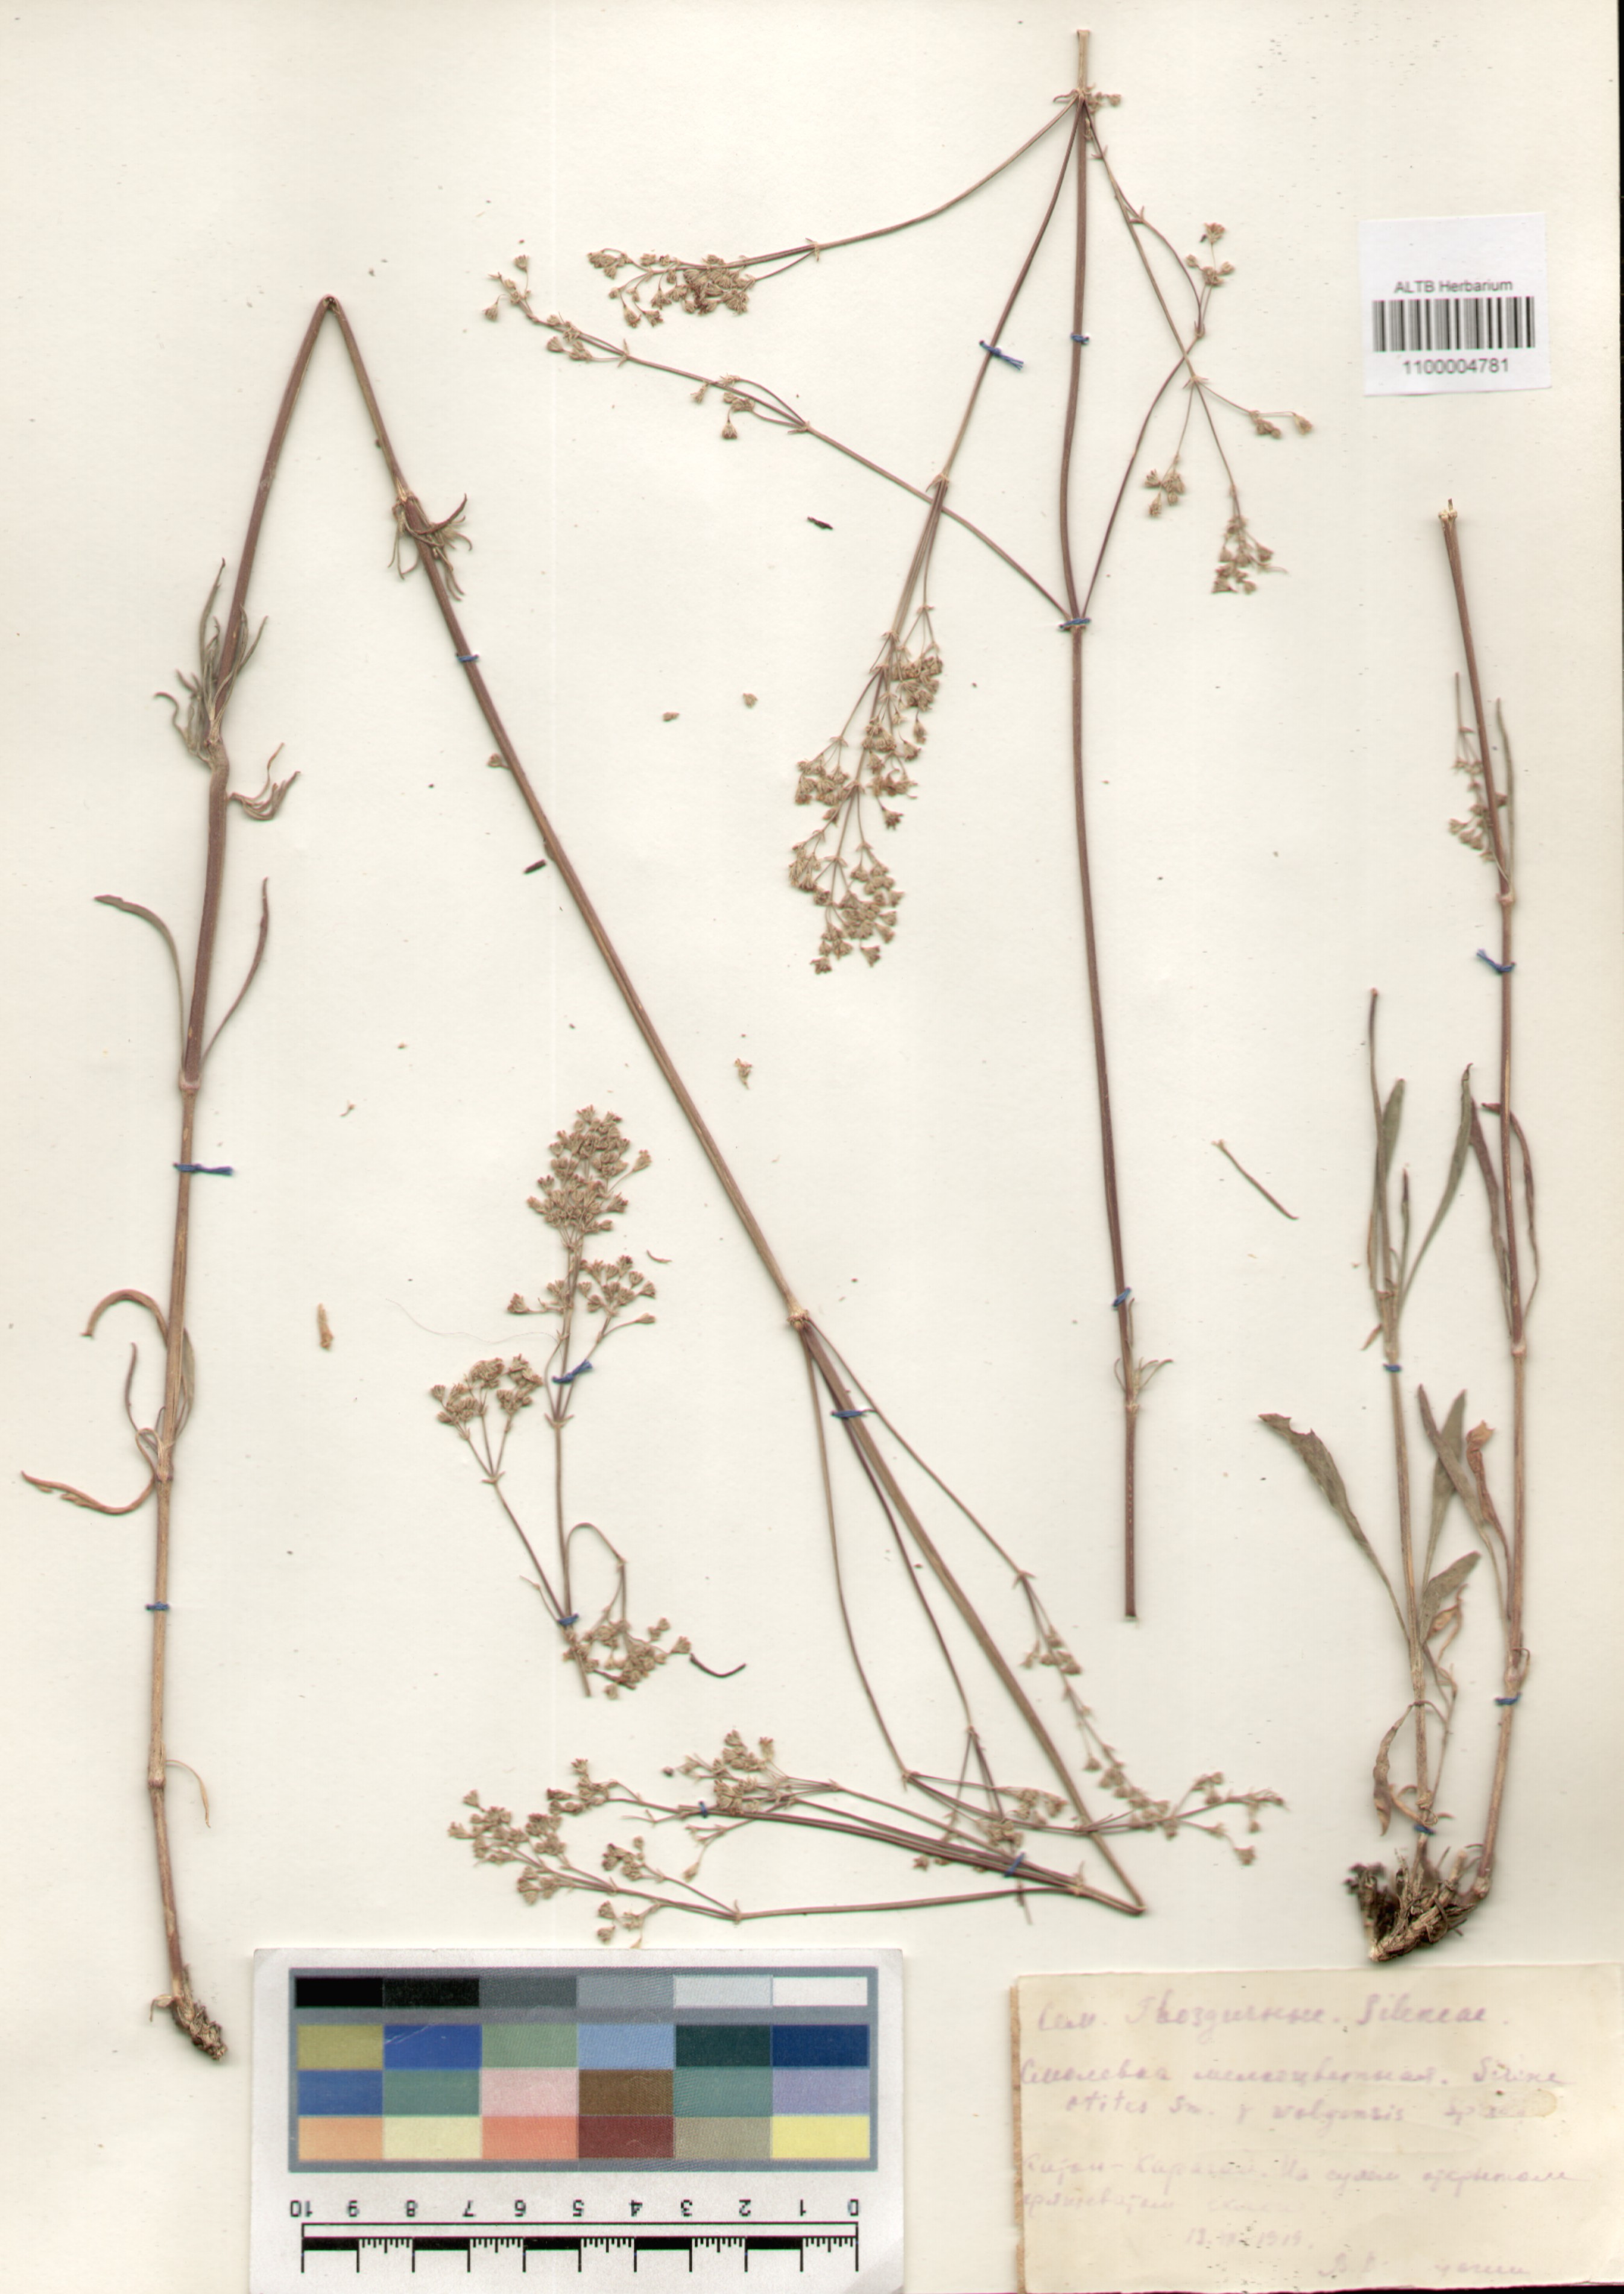 Caryophyllaceae,Silene wolgensis (Hornem.) Otth